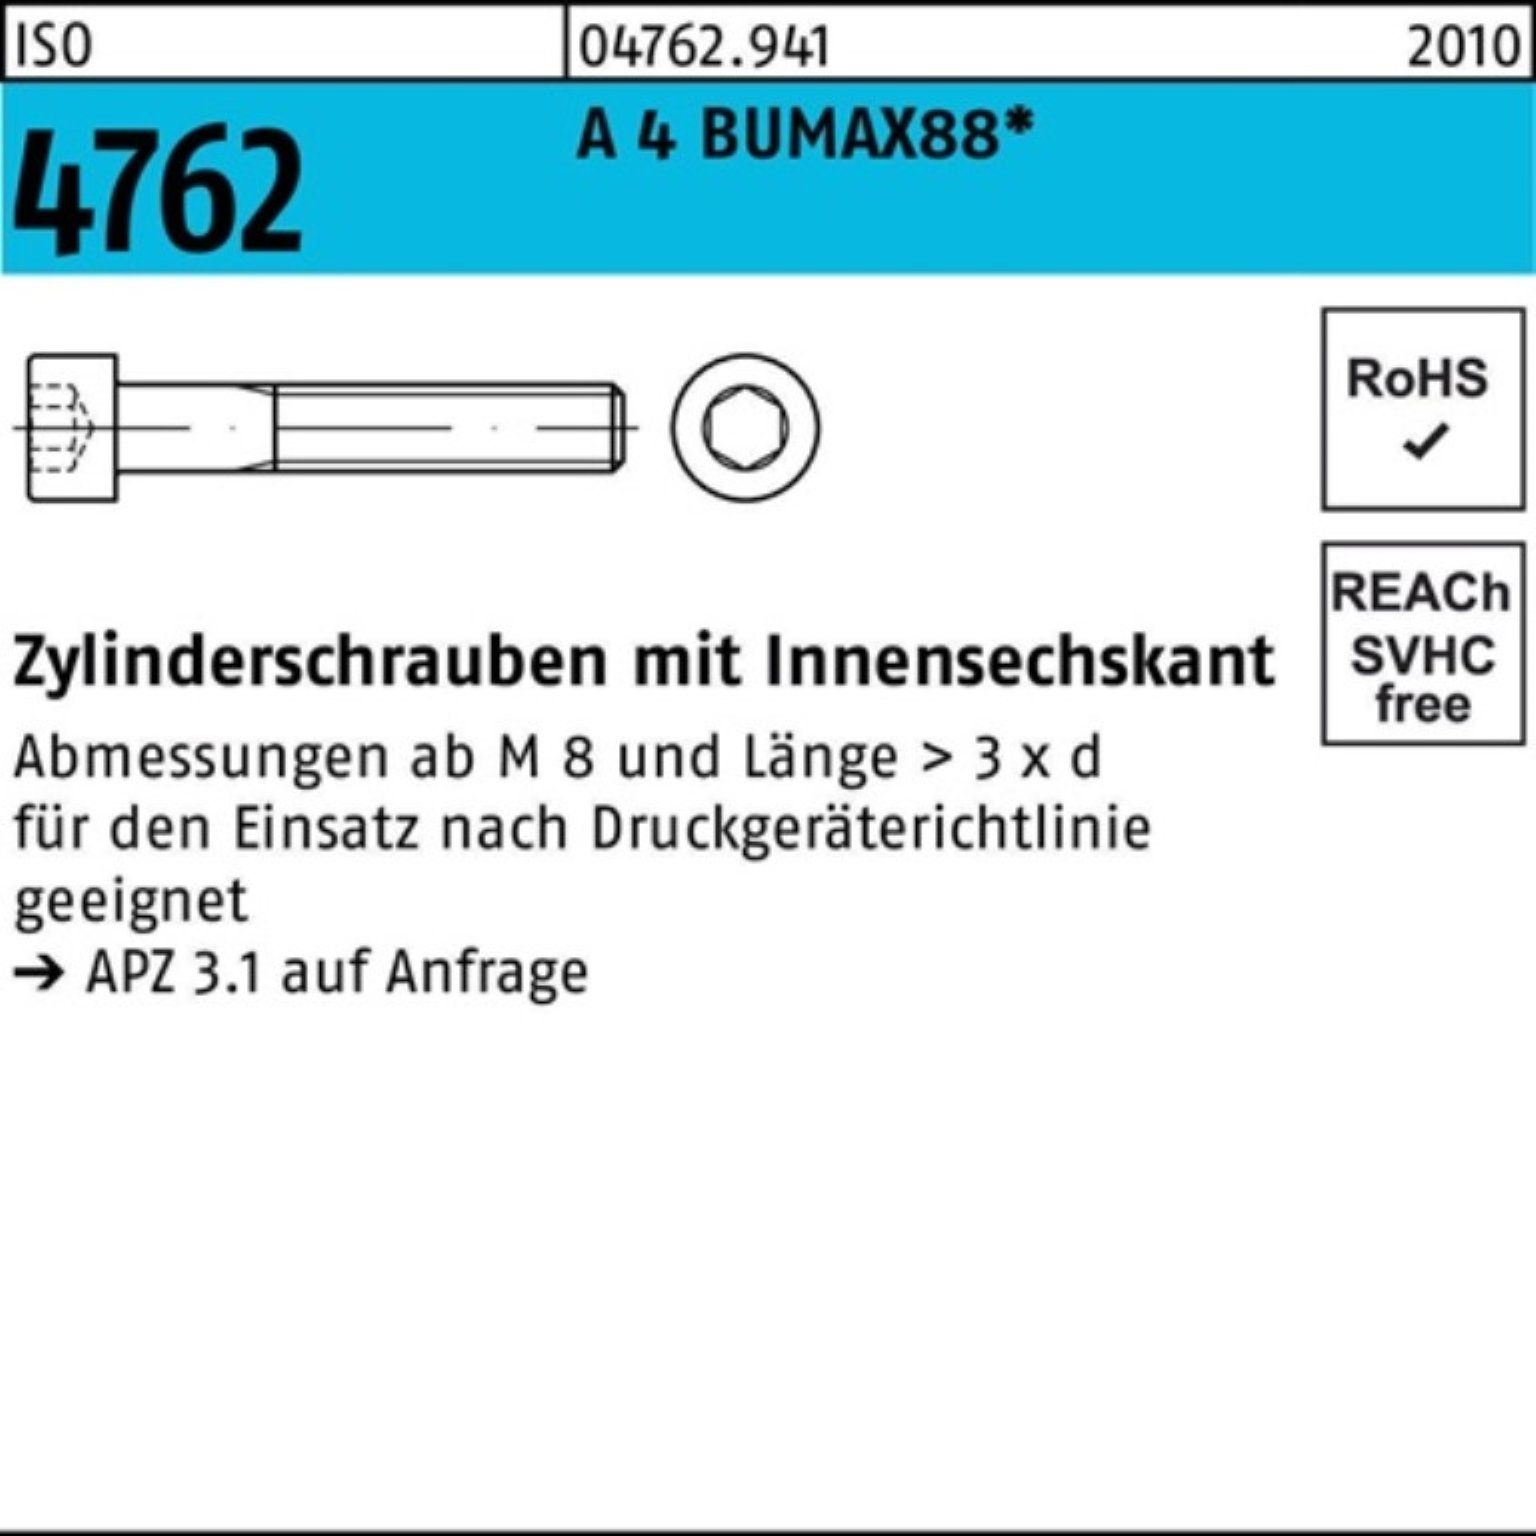 Bufab Zylinderschraube 100er Pack Zylinderschraube ISO 4762 Innen-6kt M8x 35 A 4 BUMAX88 50 S